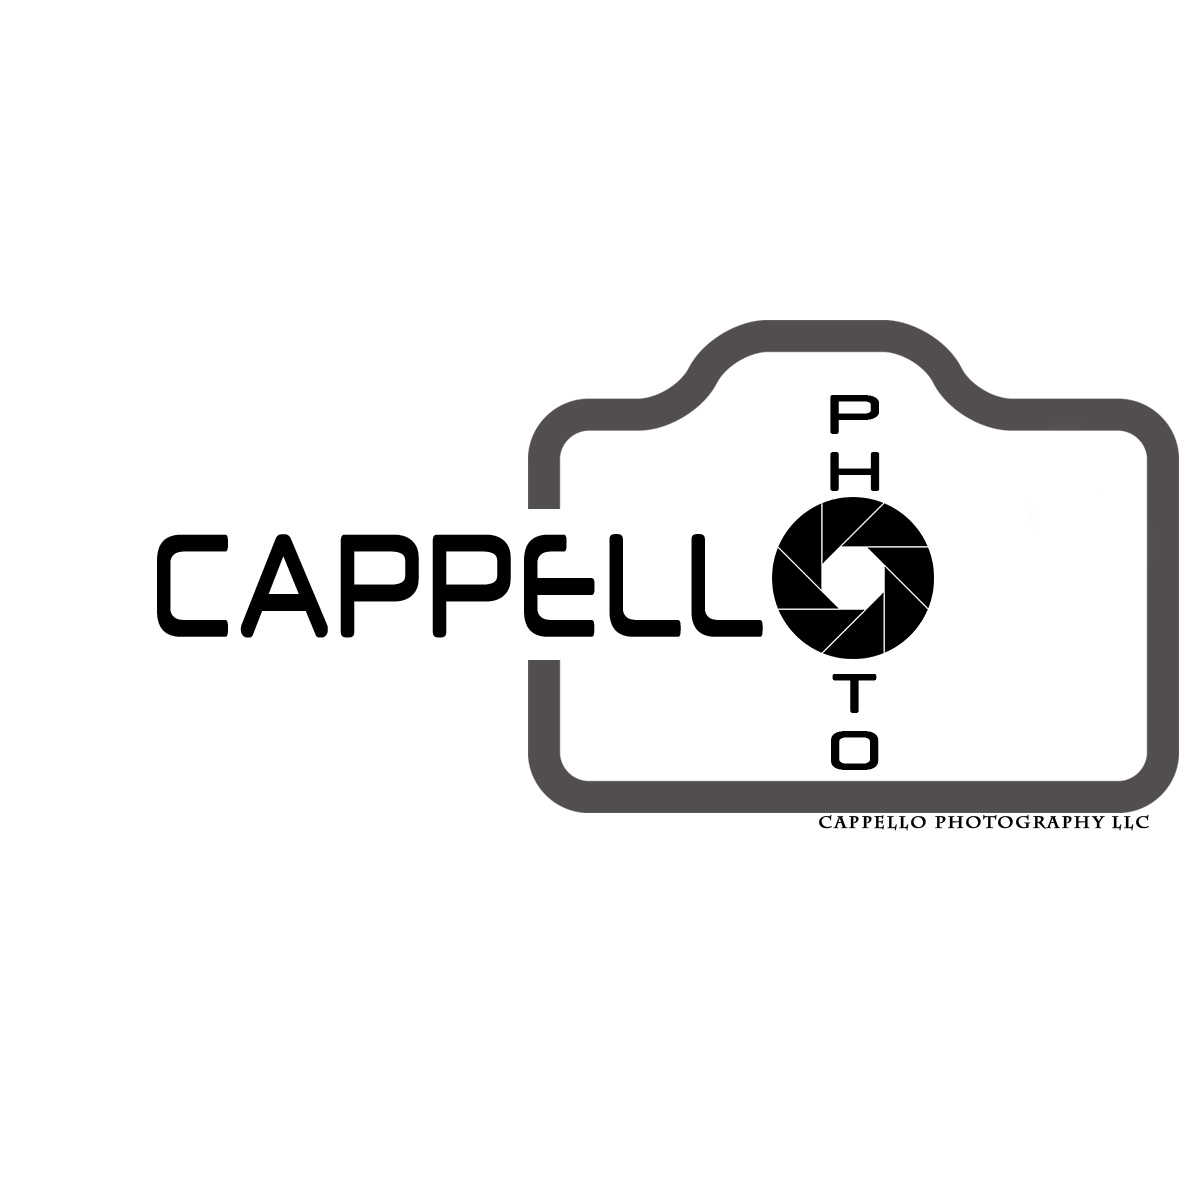 Cappello Photography LLC